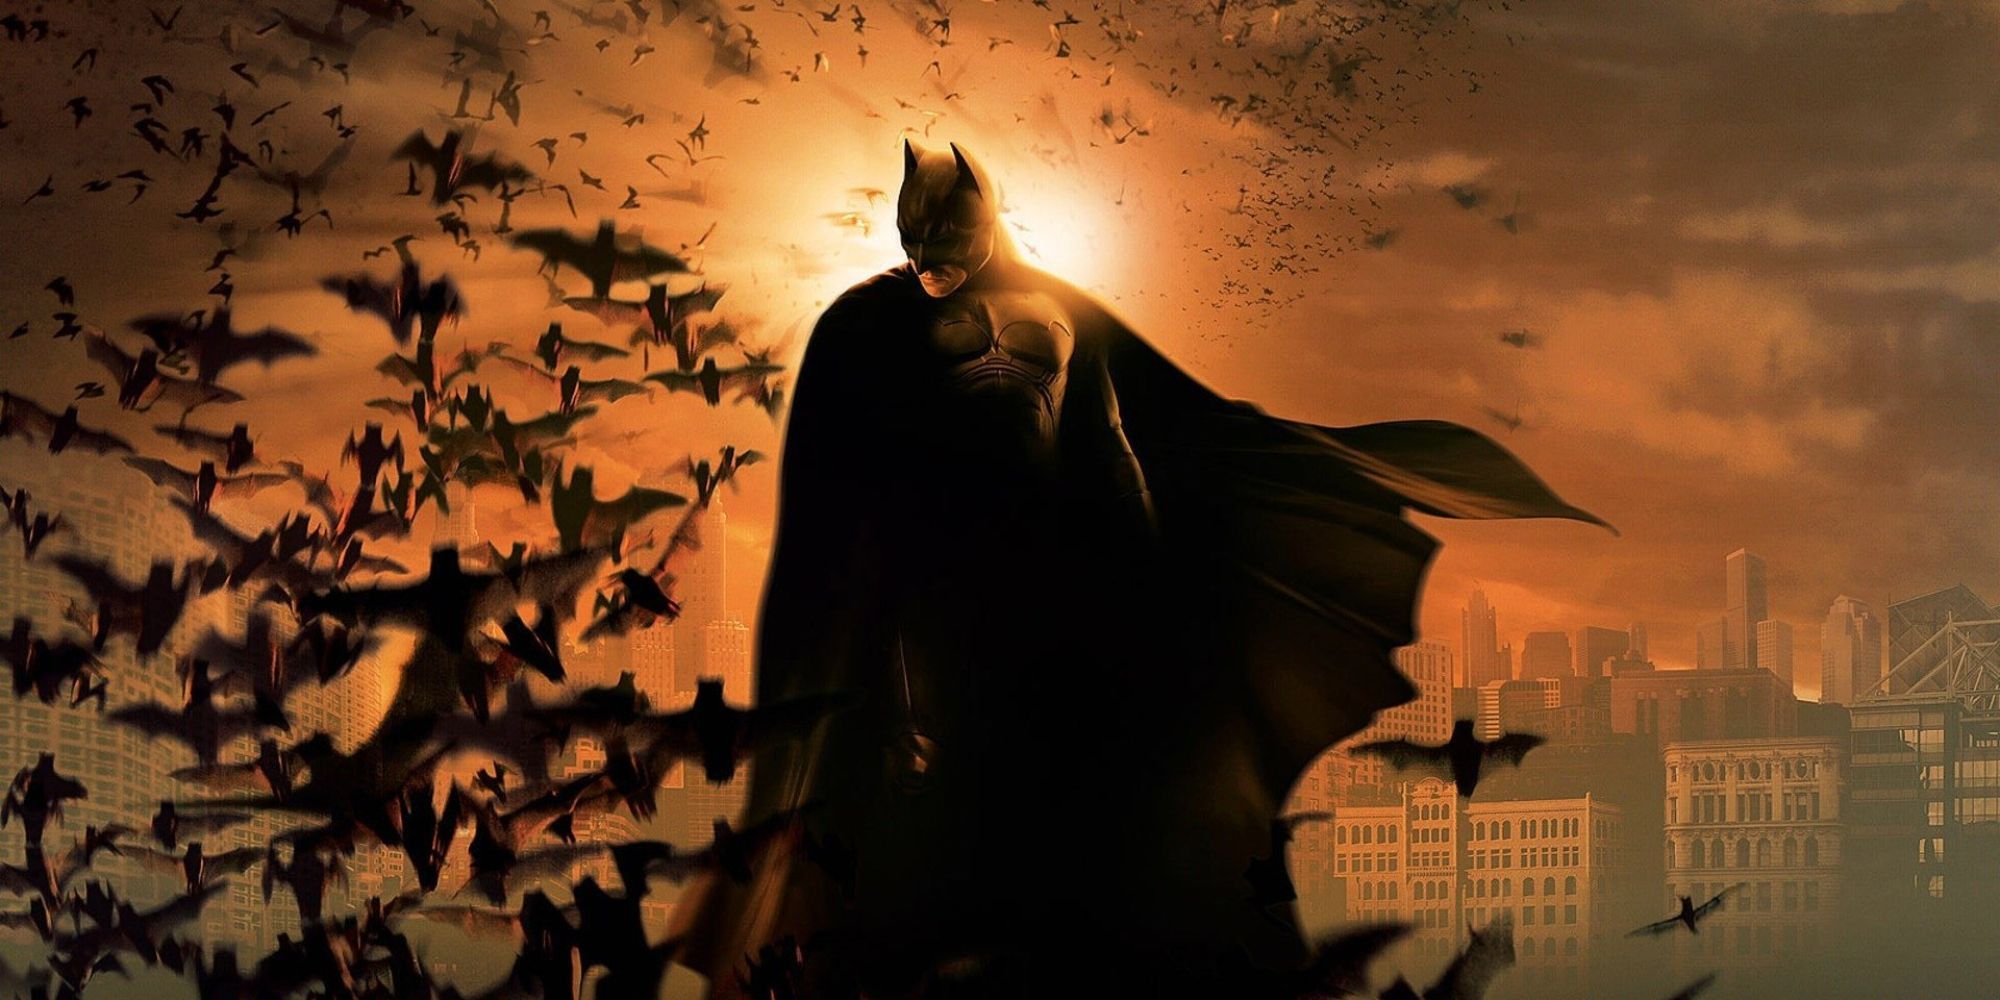 Christian Bale's Batman in the poster for Batman Begins.